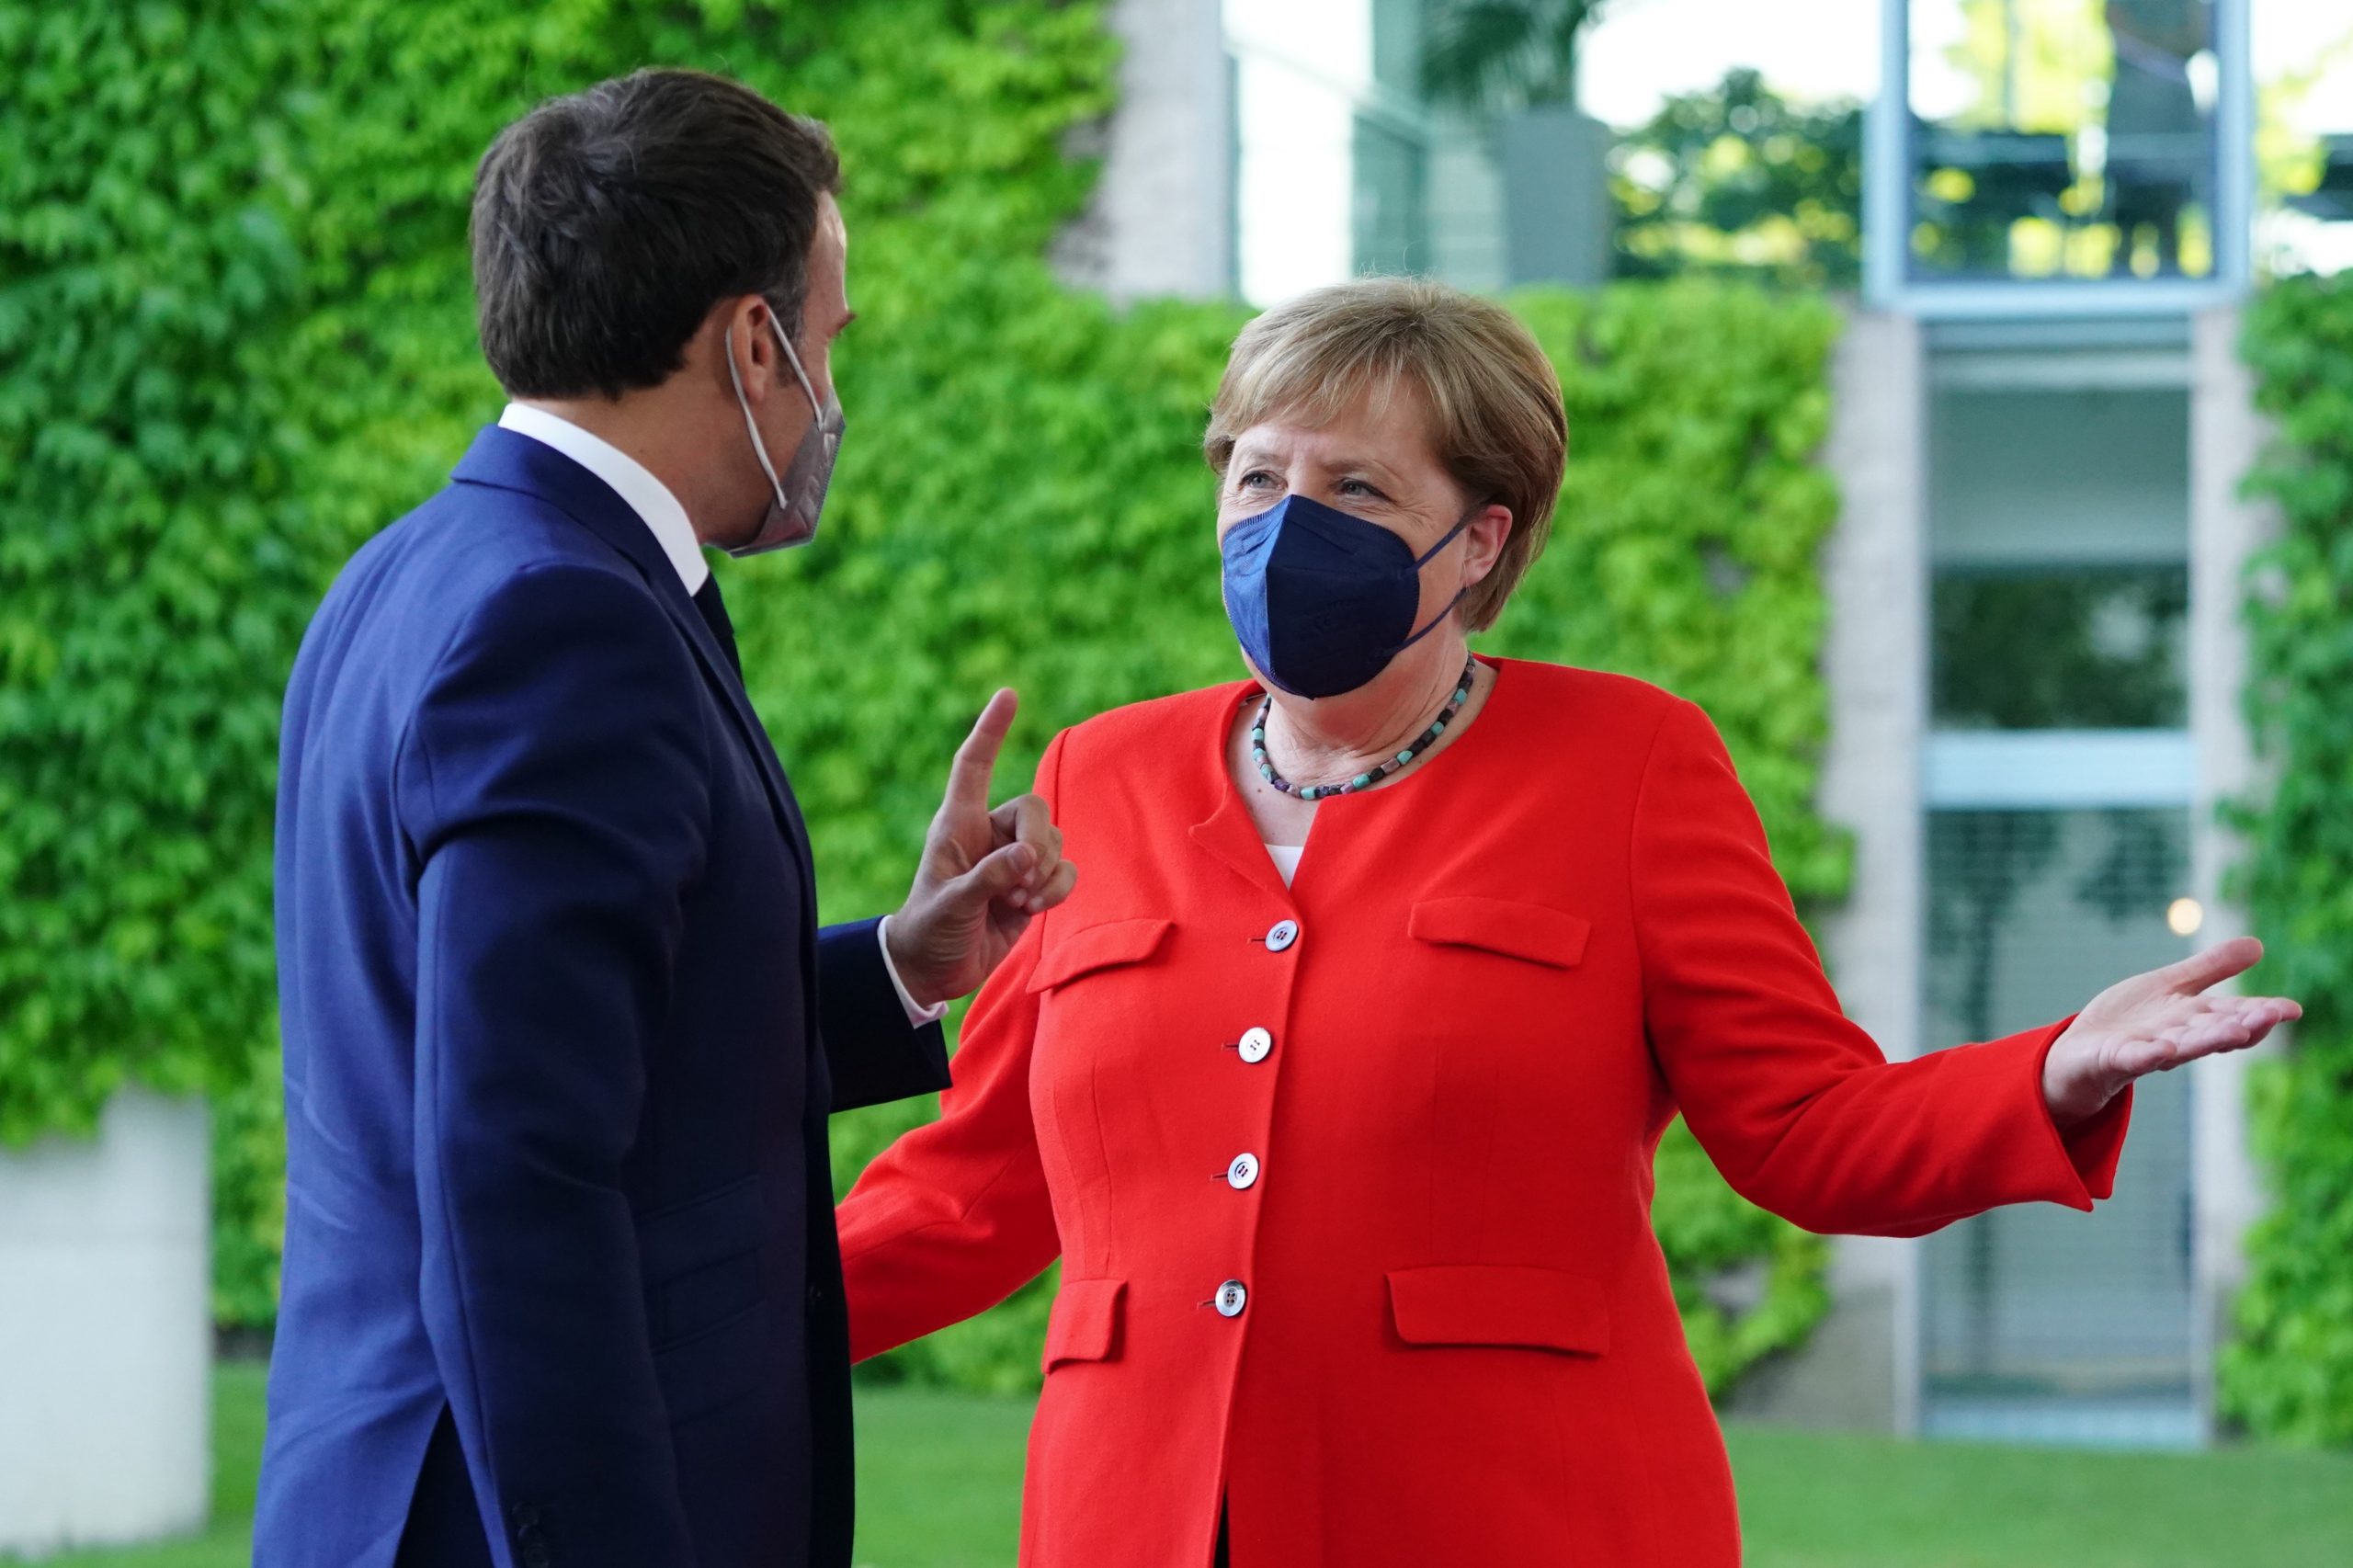 Emanuel Makron i Angela Merkel